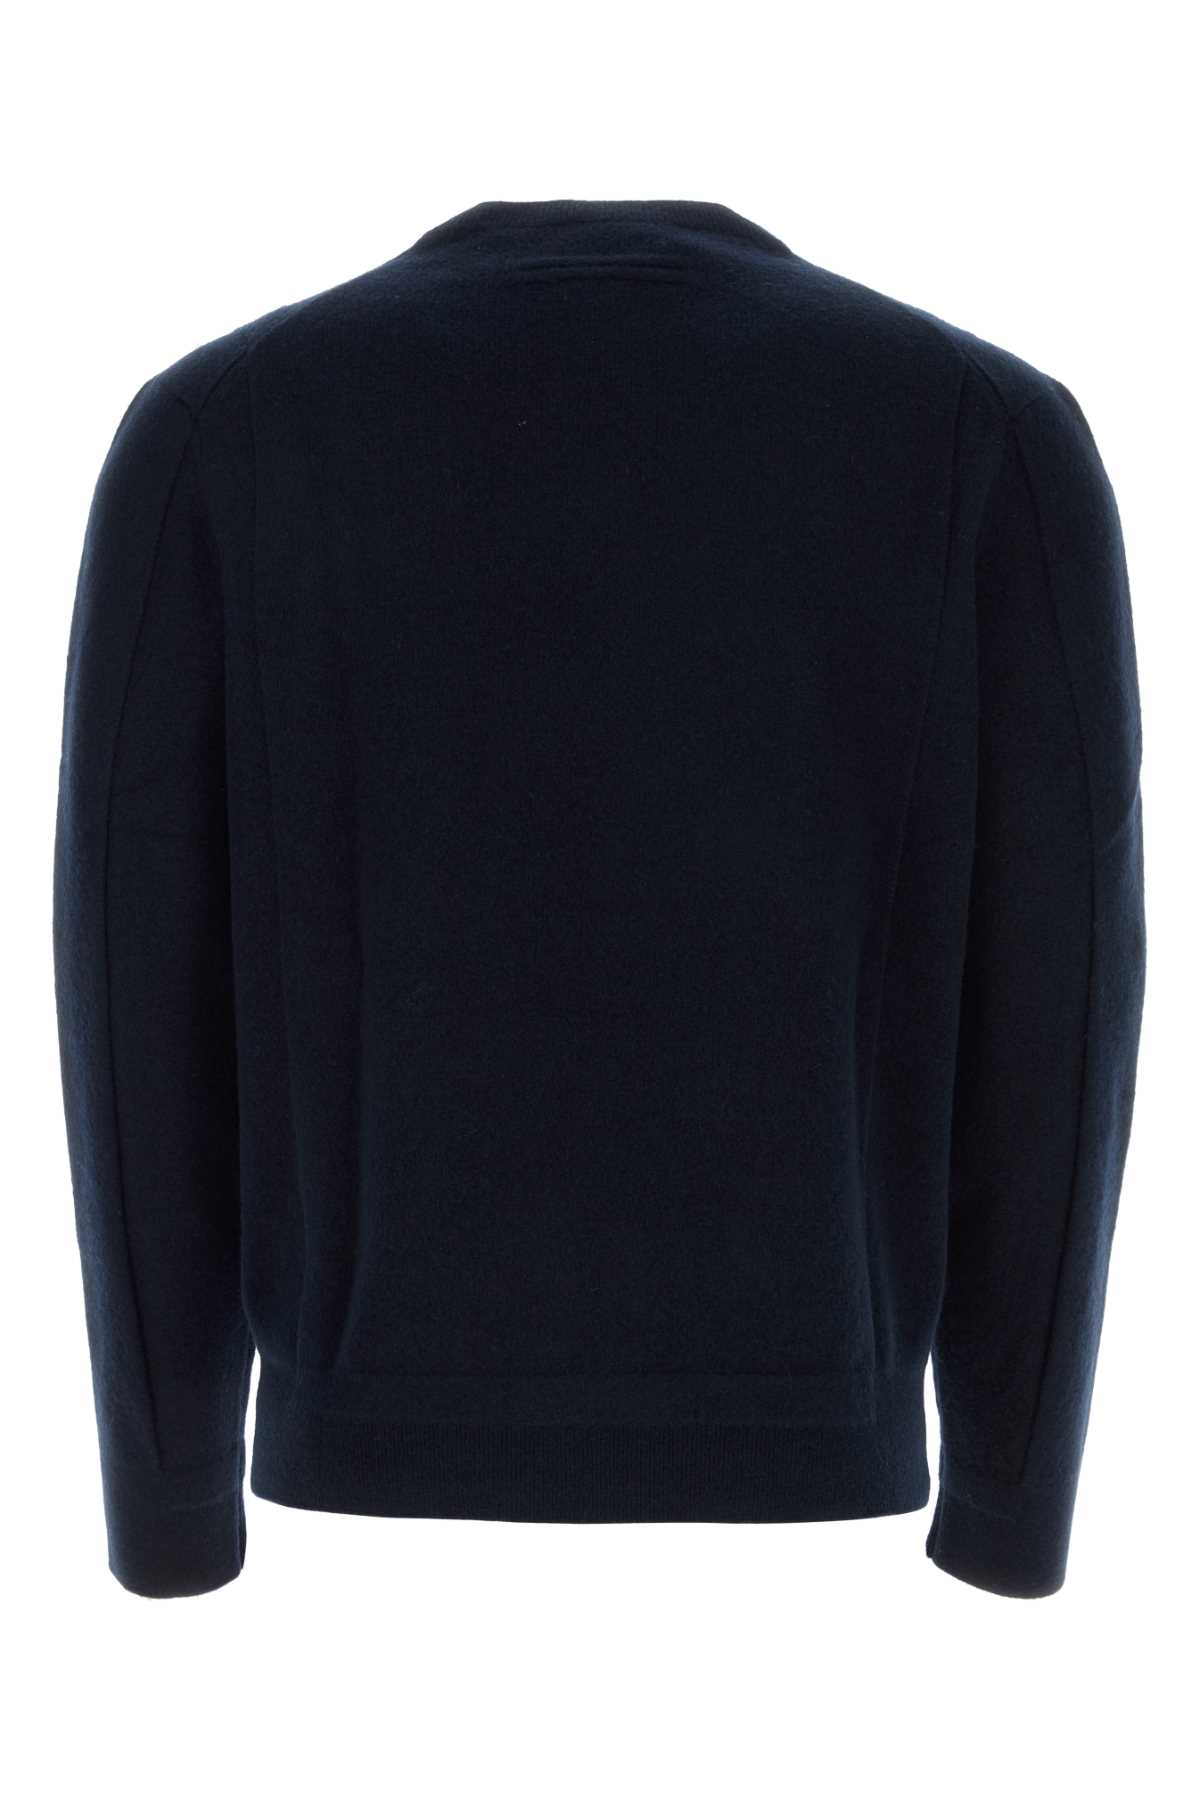 Zegna Midnight Blue Wool Blend Sweater In B98